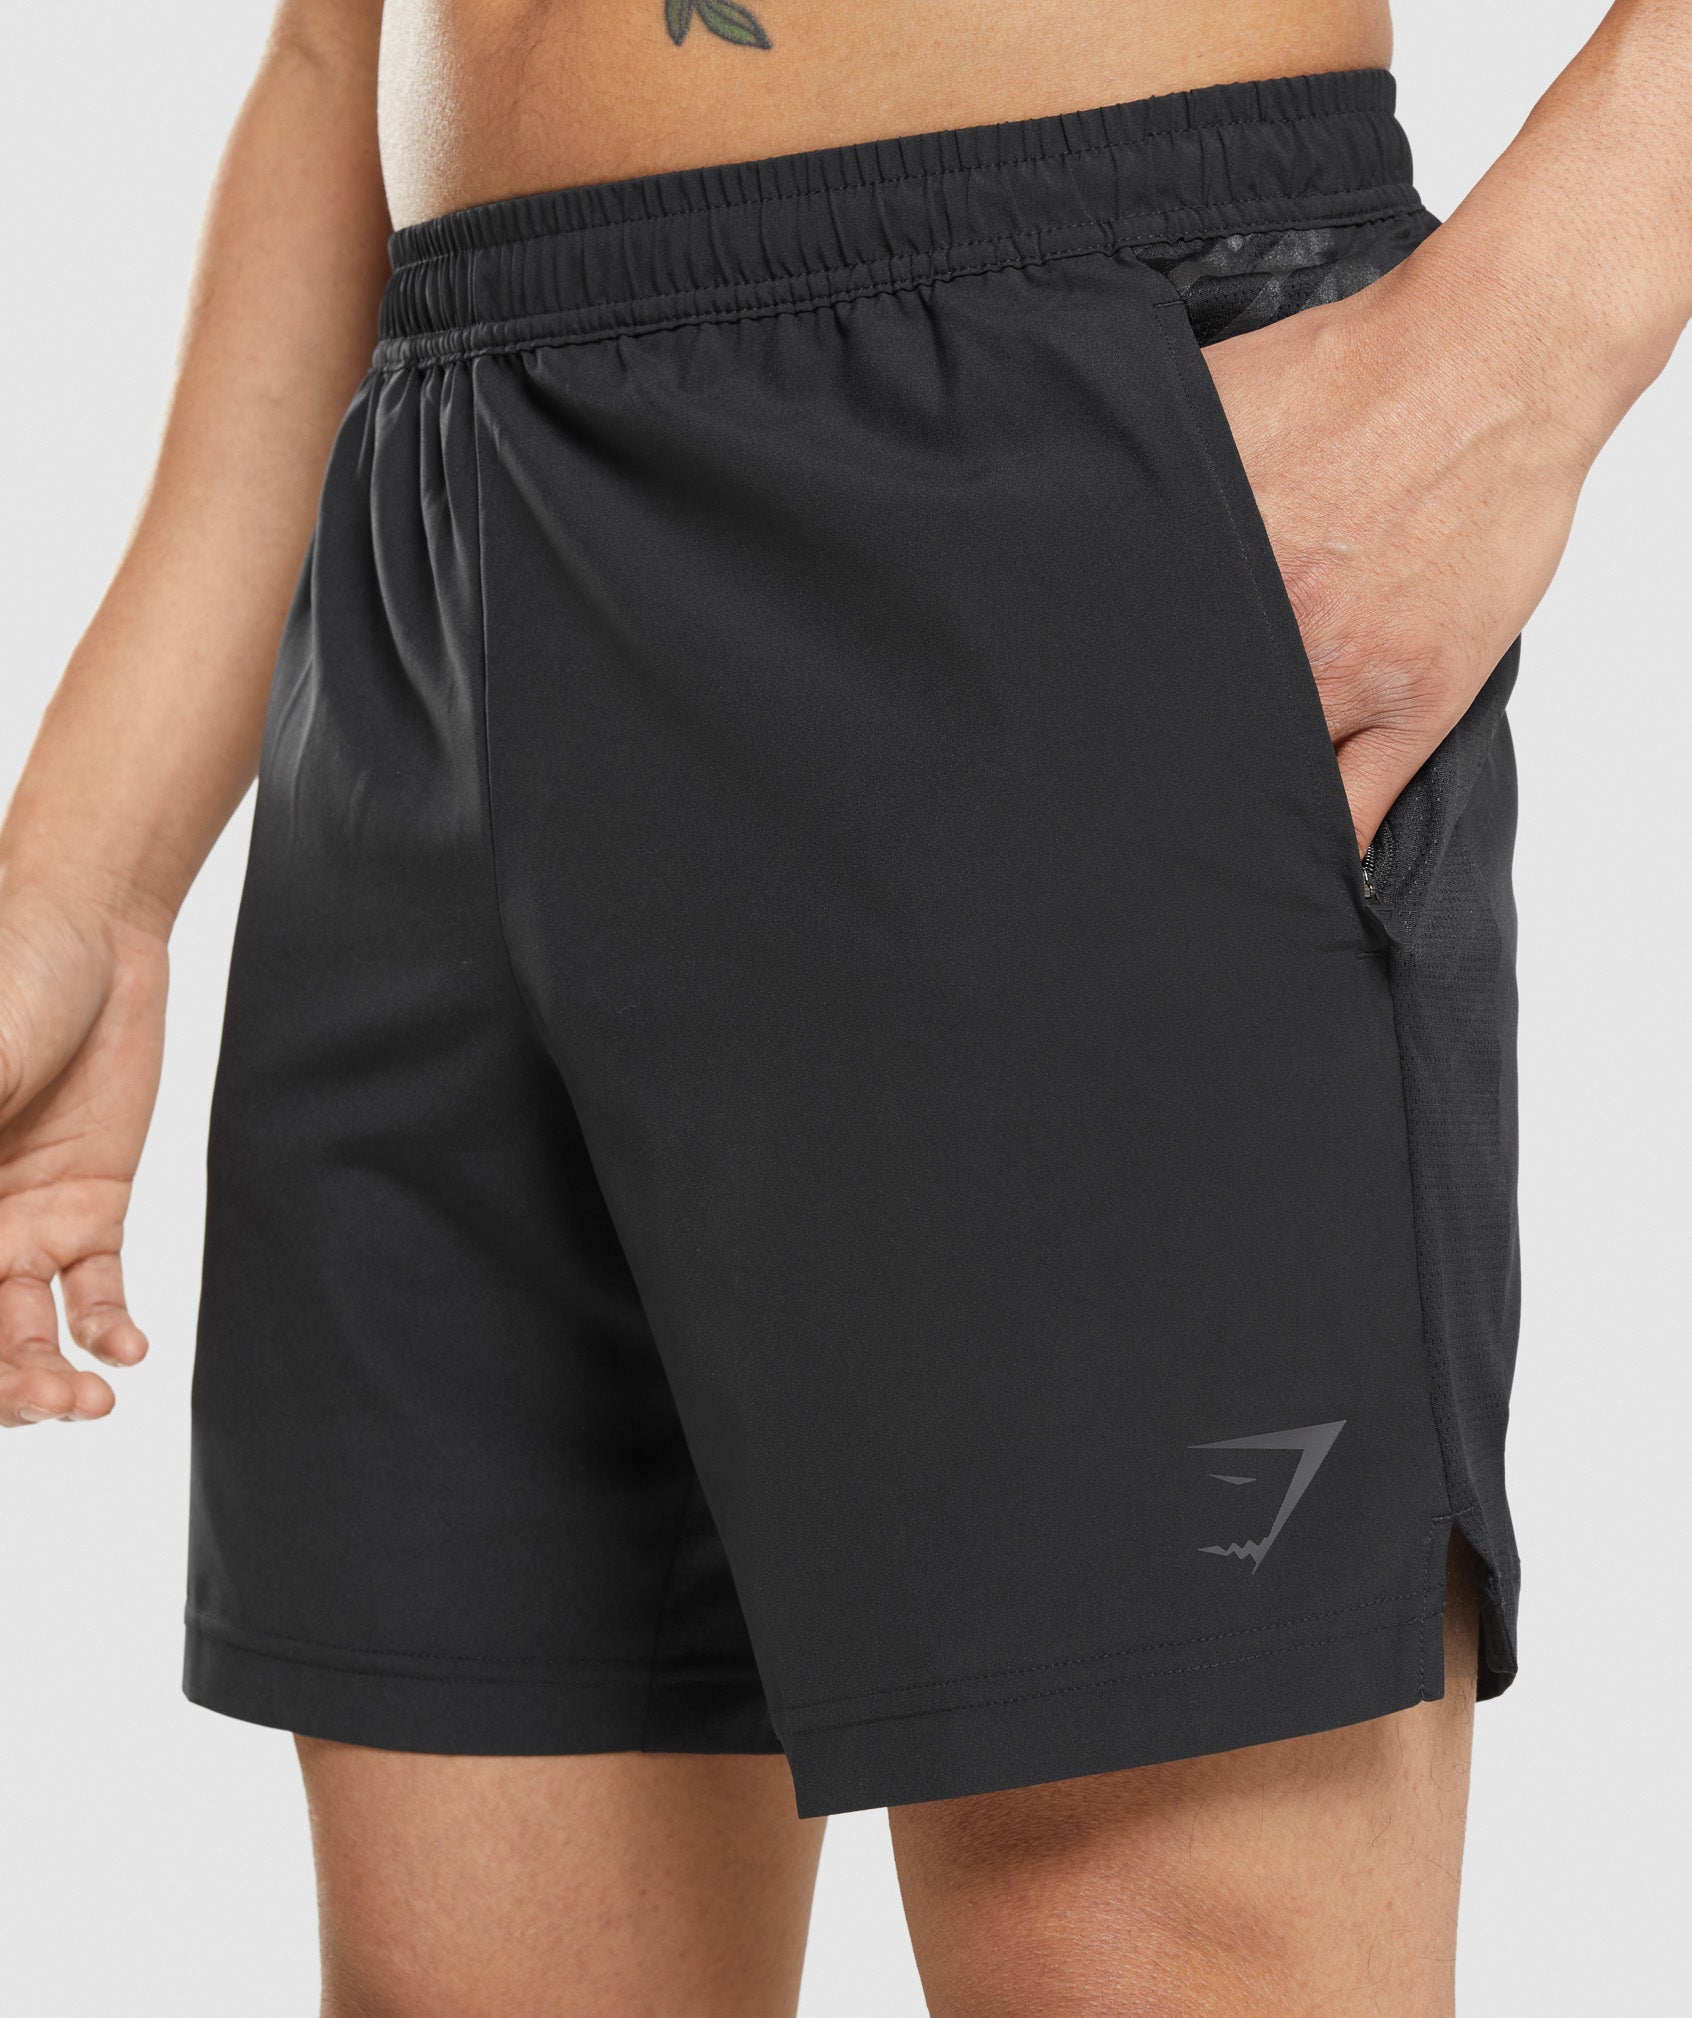 Gymshark Shorts Women XS Black Solid Drawstring Pockets Stretch